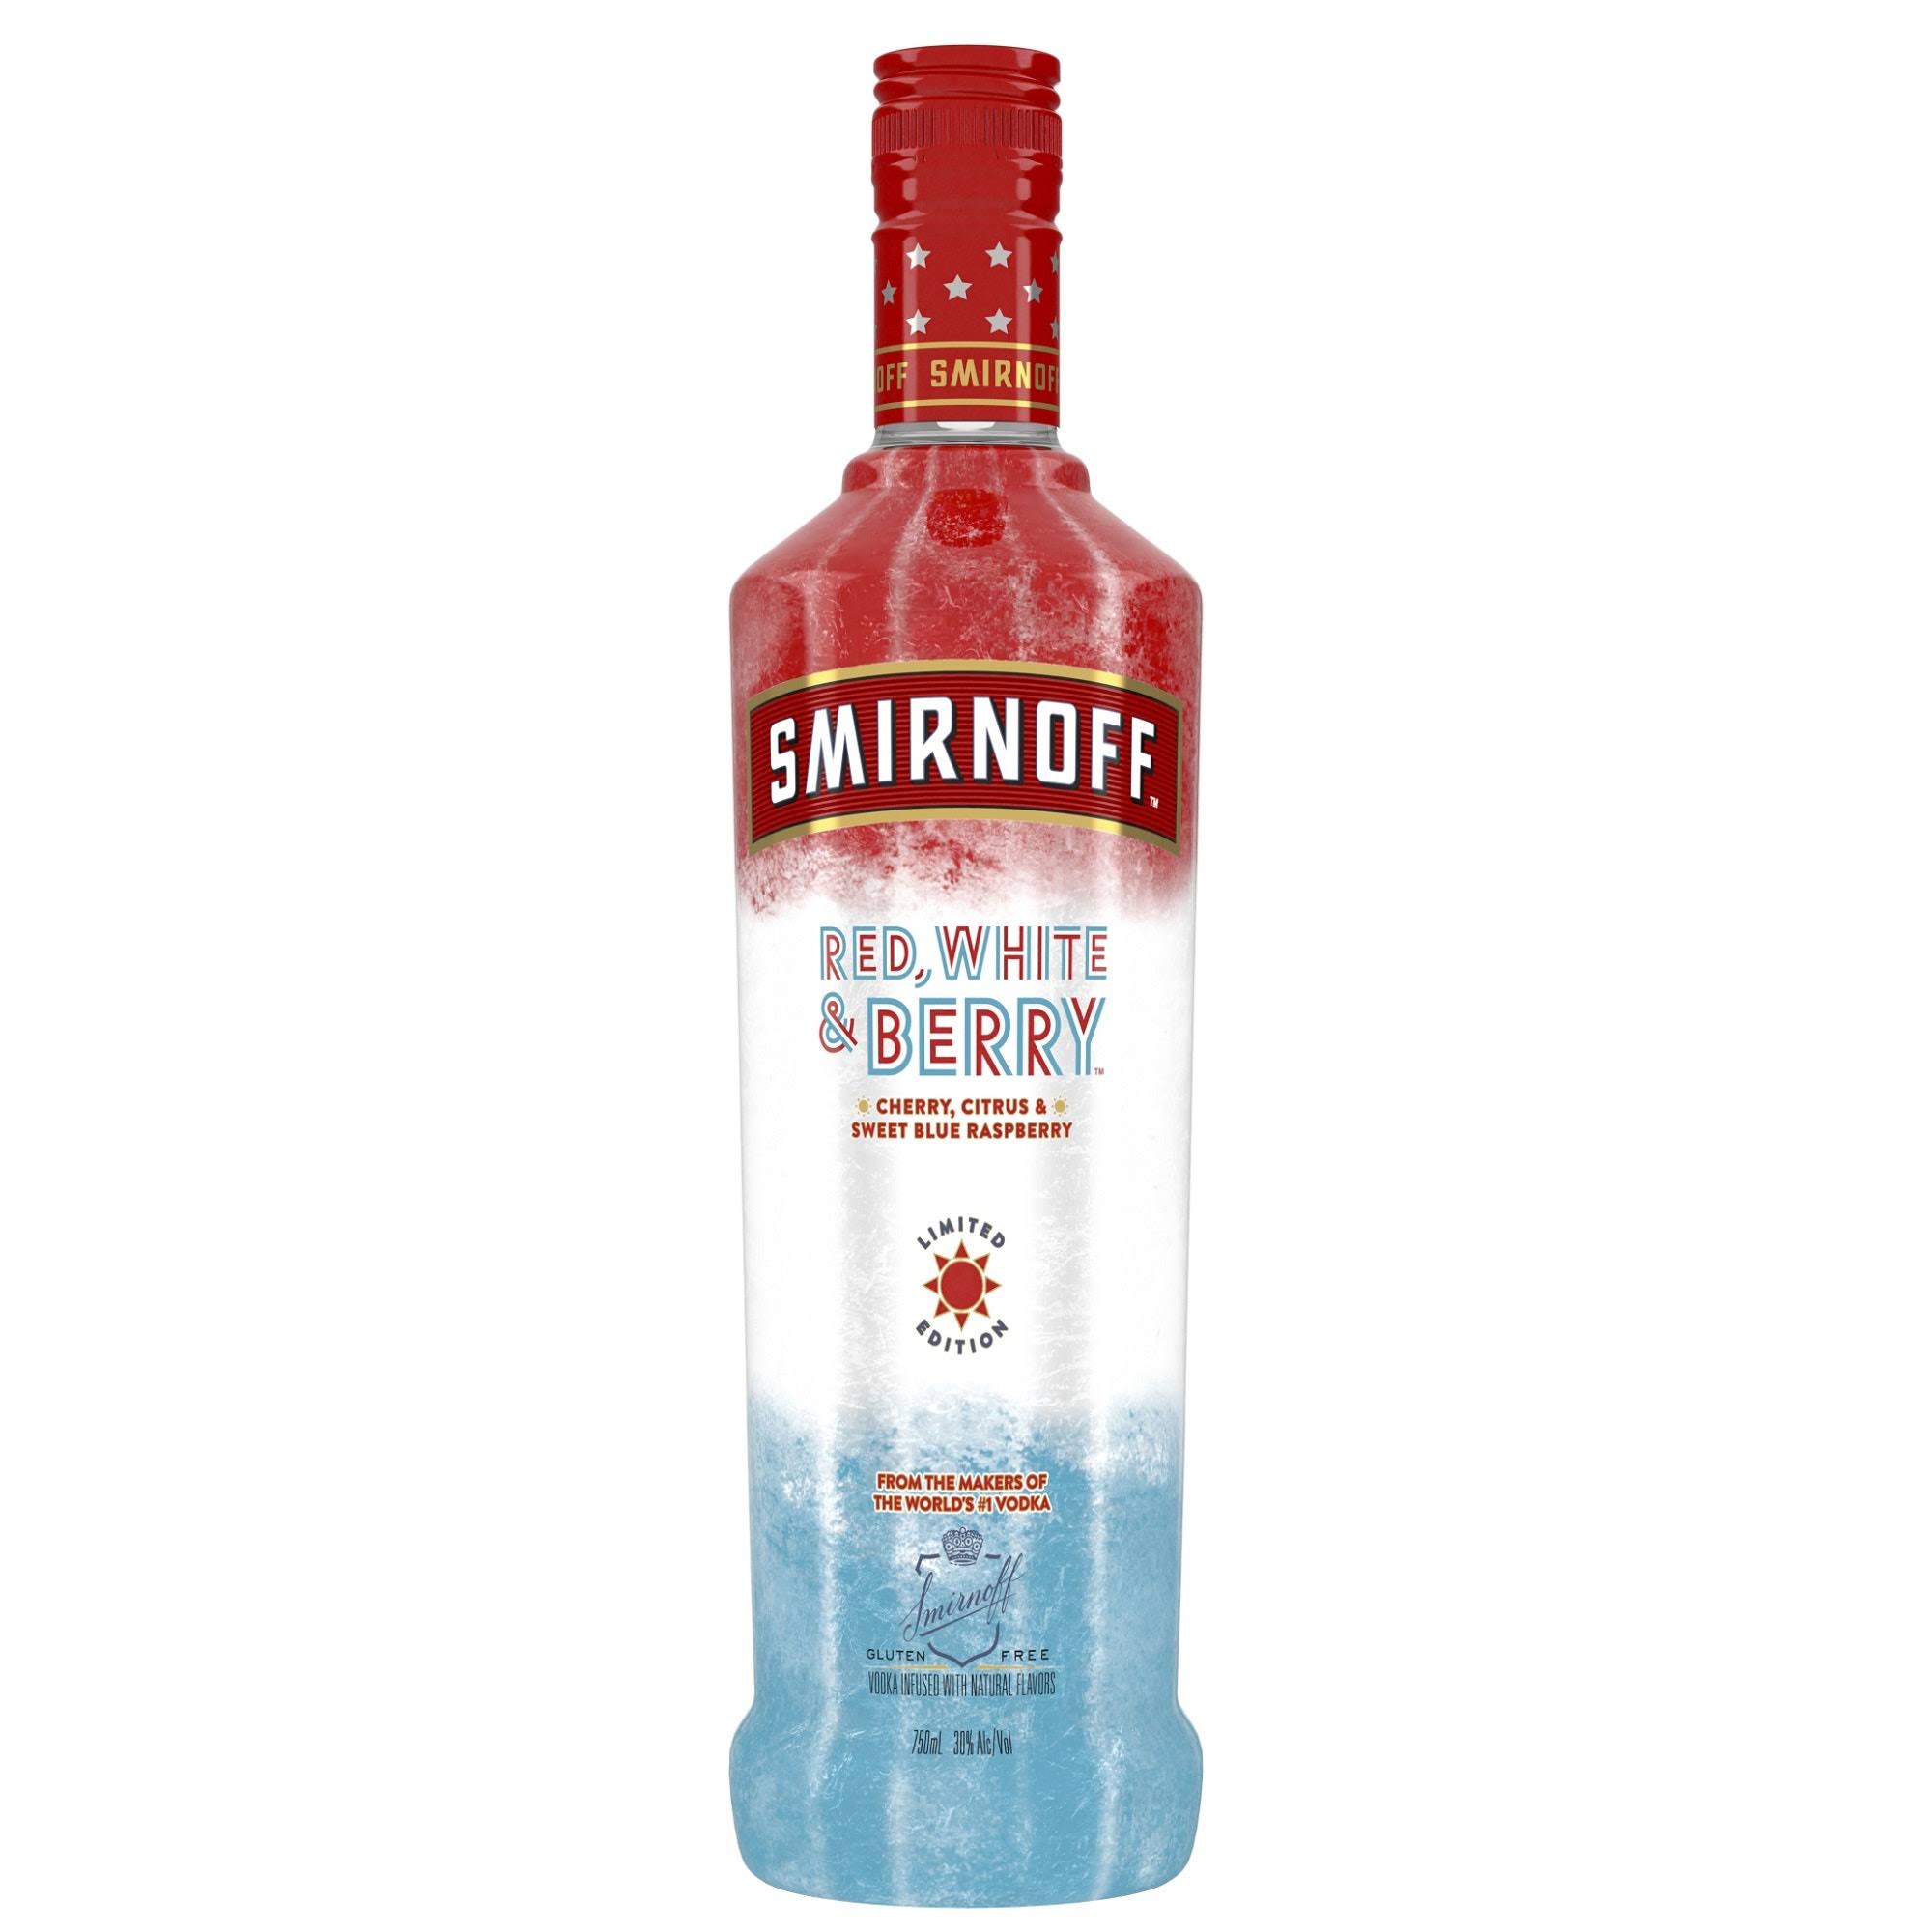 Smirnoff Vodka - Red, White and Berry, 750ml